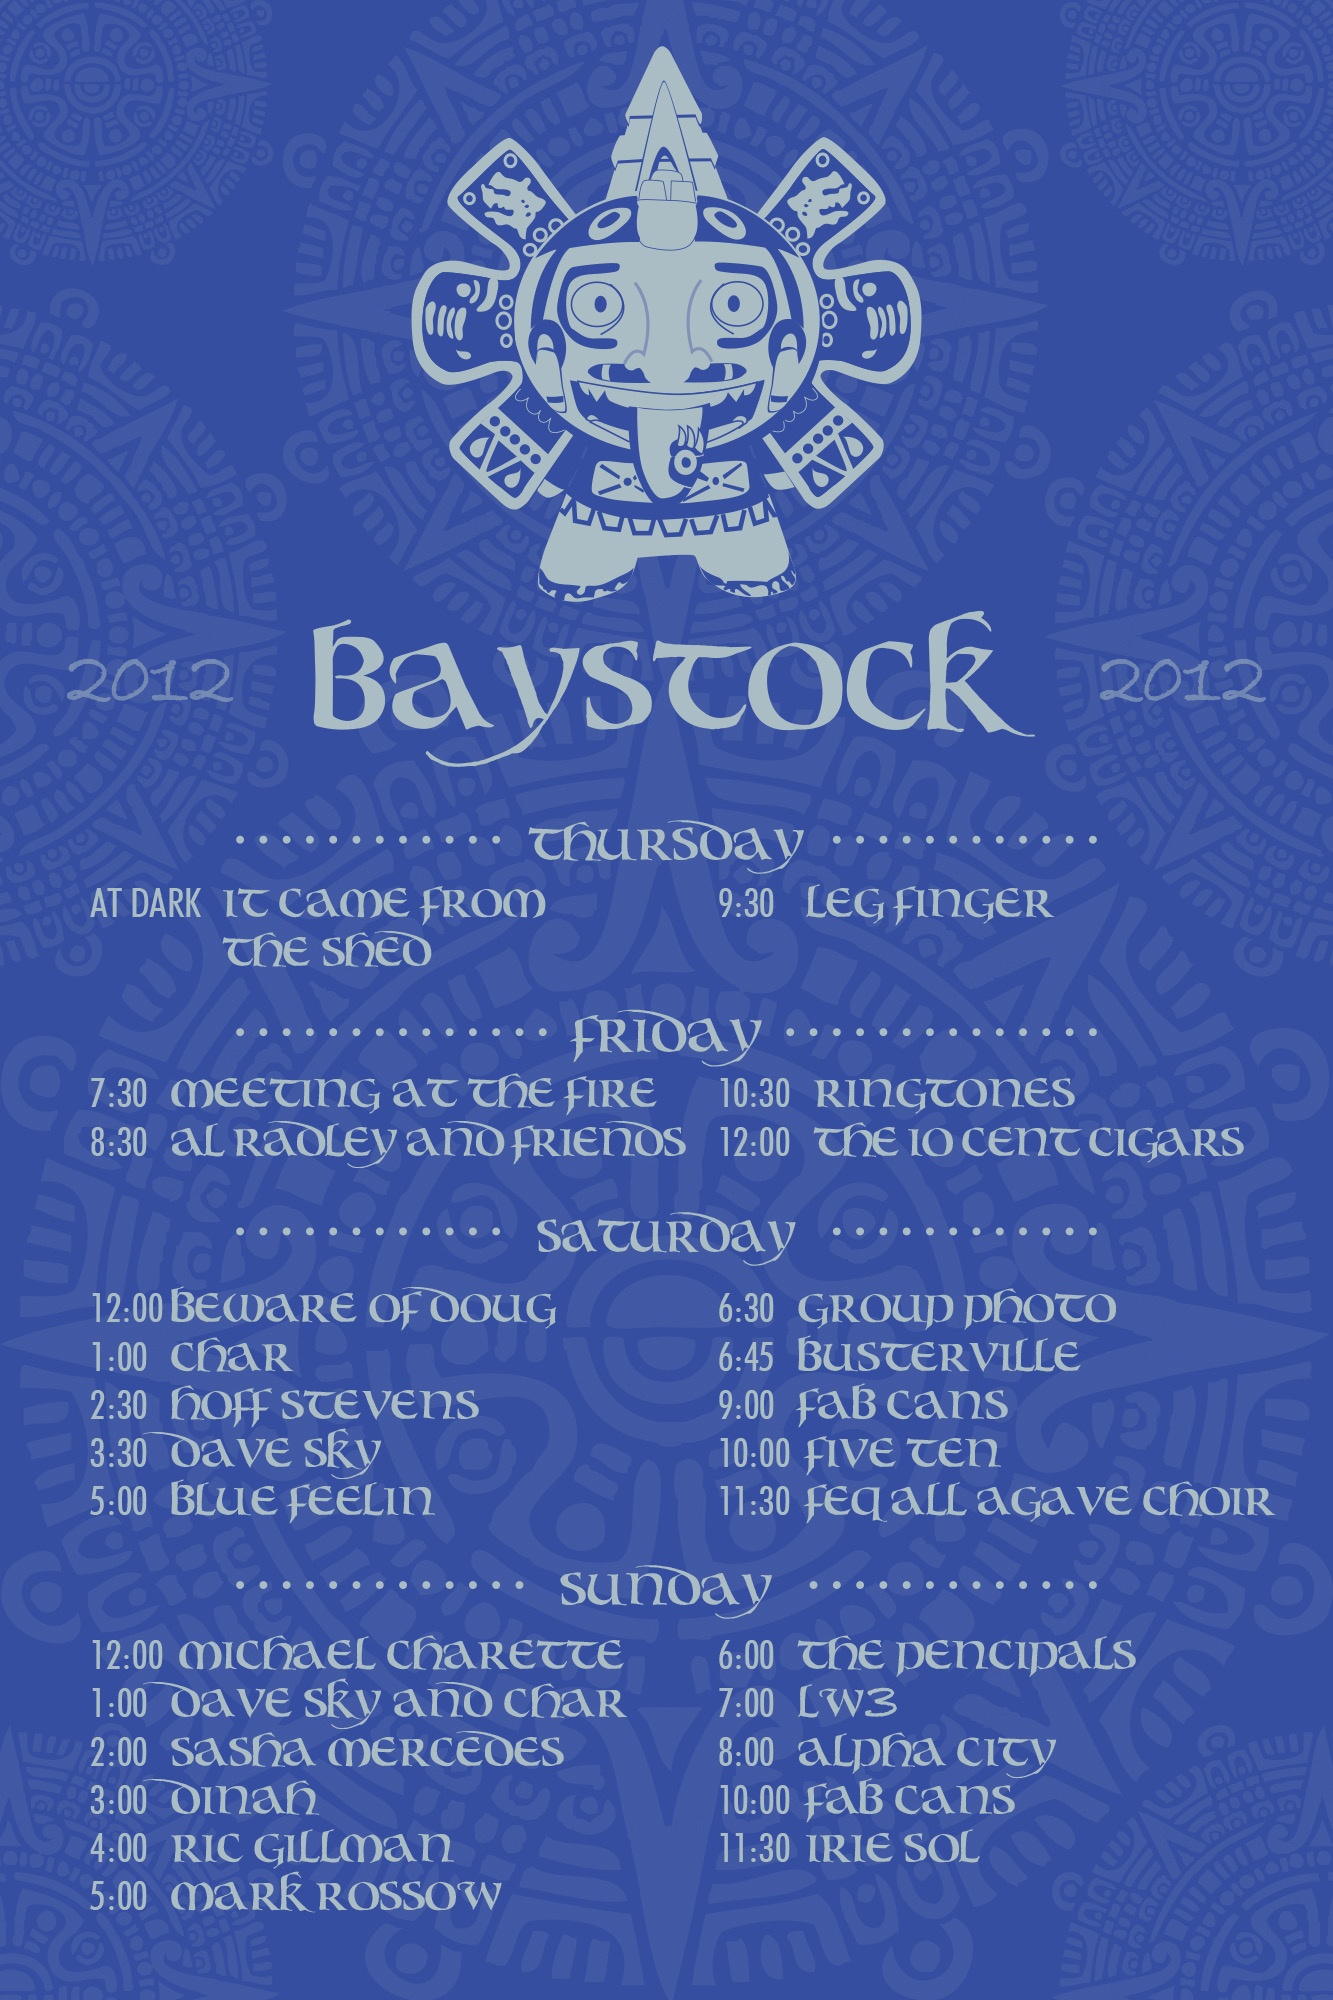 Baystock 2012 layout to print